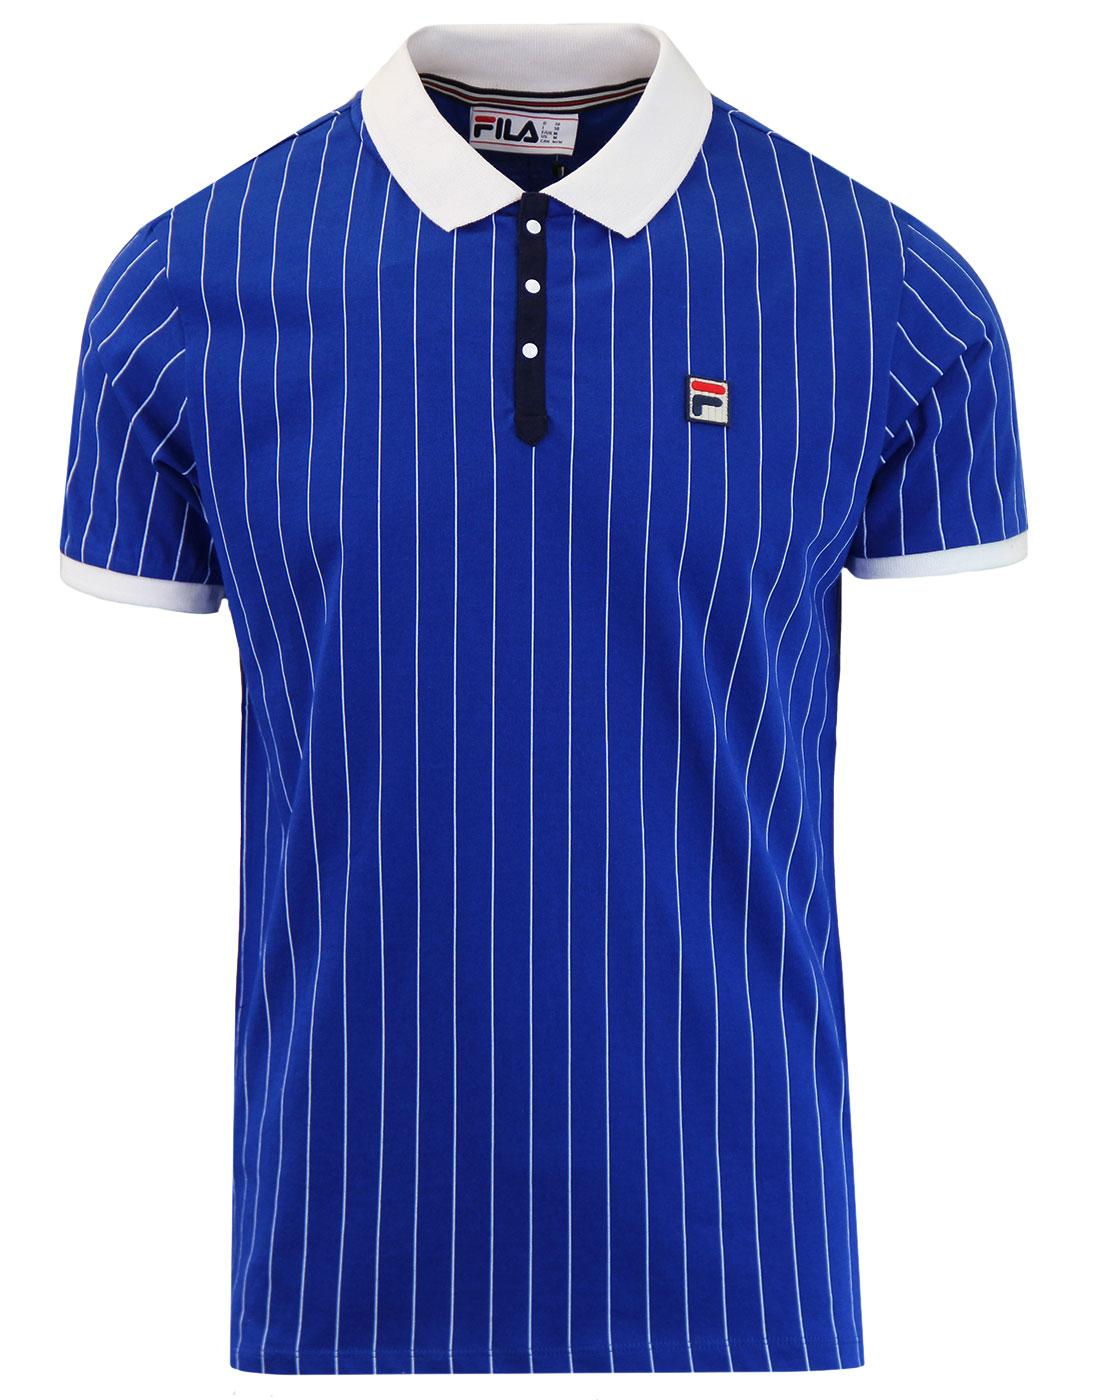 FILA VINTAGE BB1 Retro 1970s Borg Tennis Polo Shirt in Blue